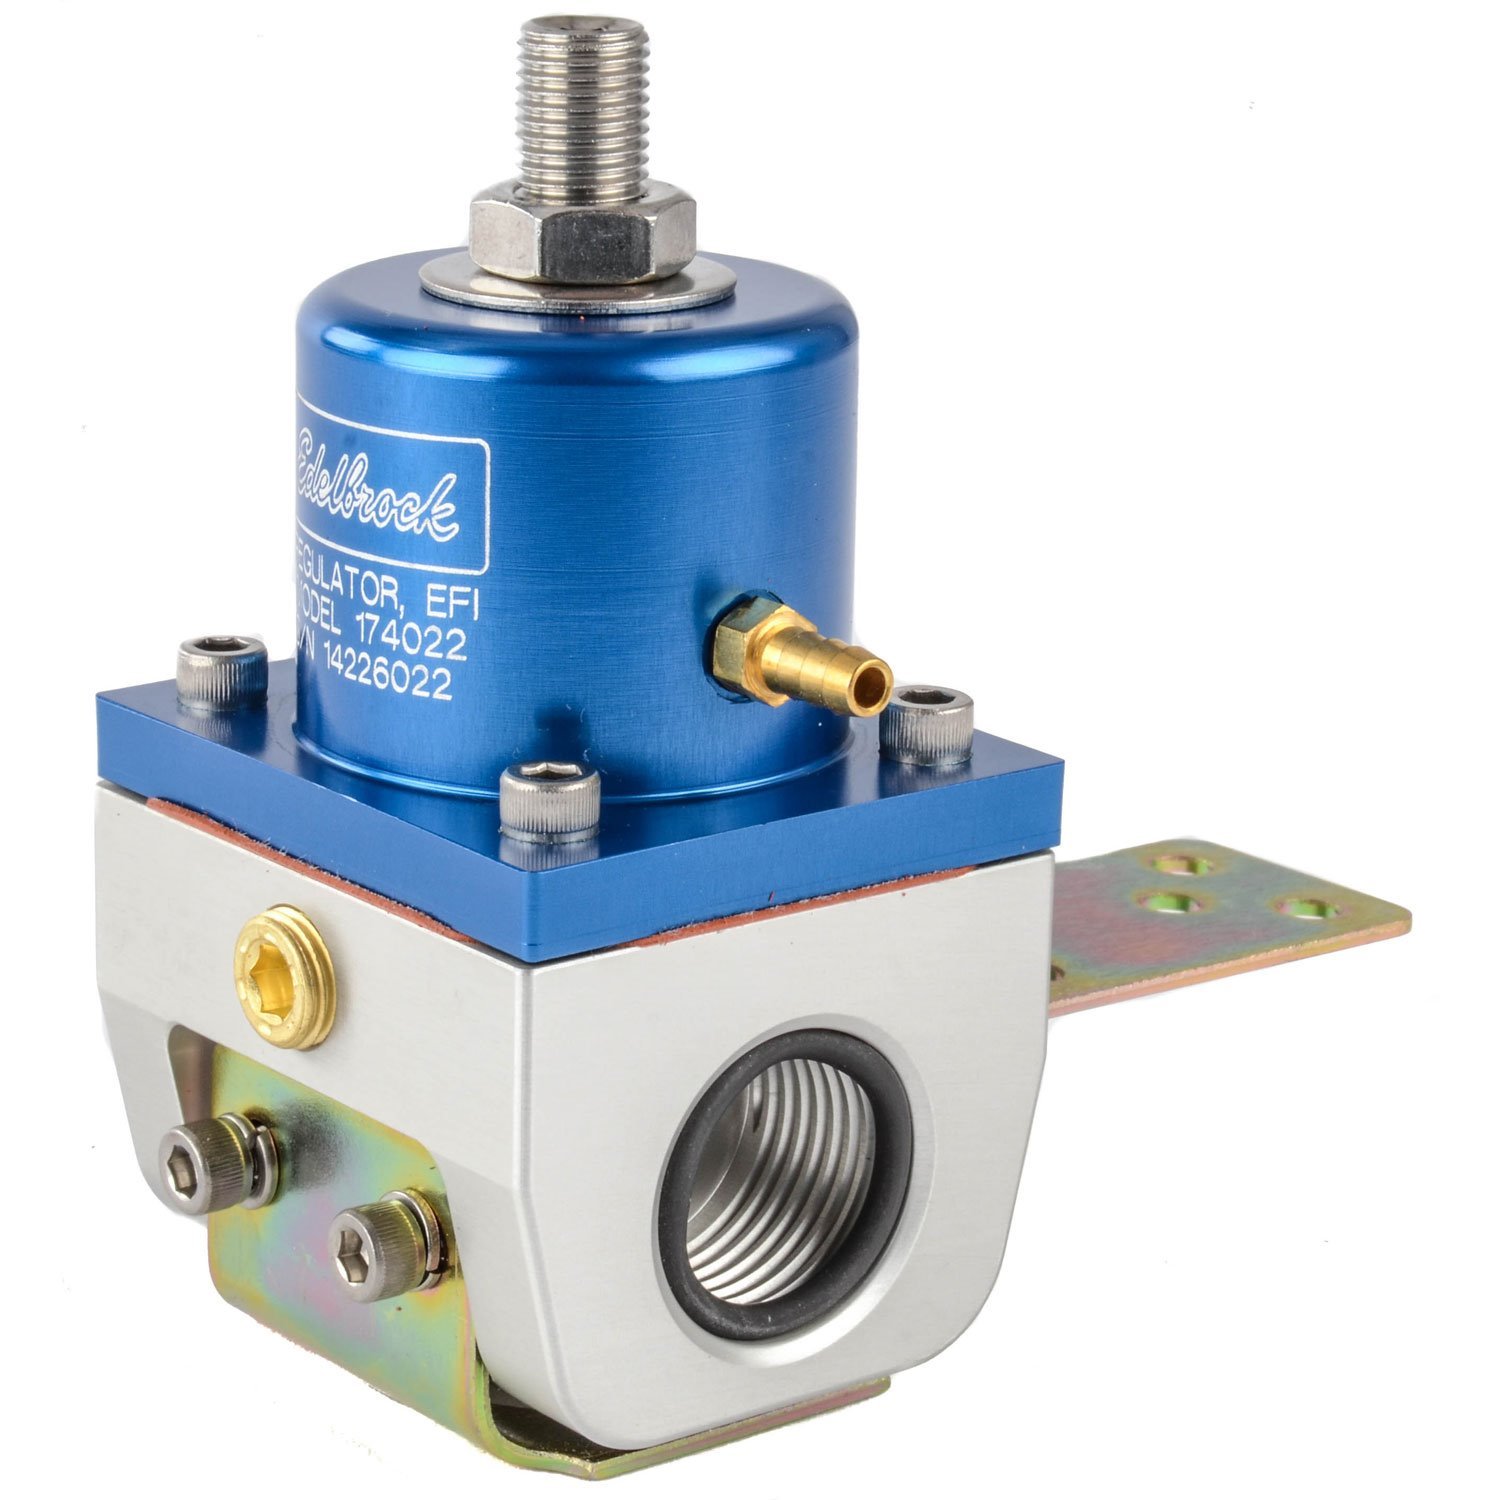 EFI Adjustable Fuel Pressure Regulator 180 GPH with -10AN Inlet/Outlet in Blue Finish